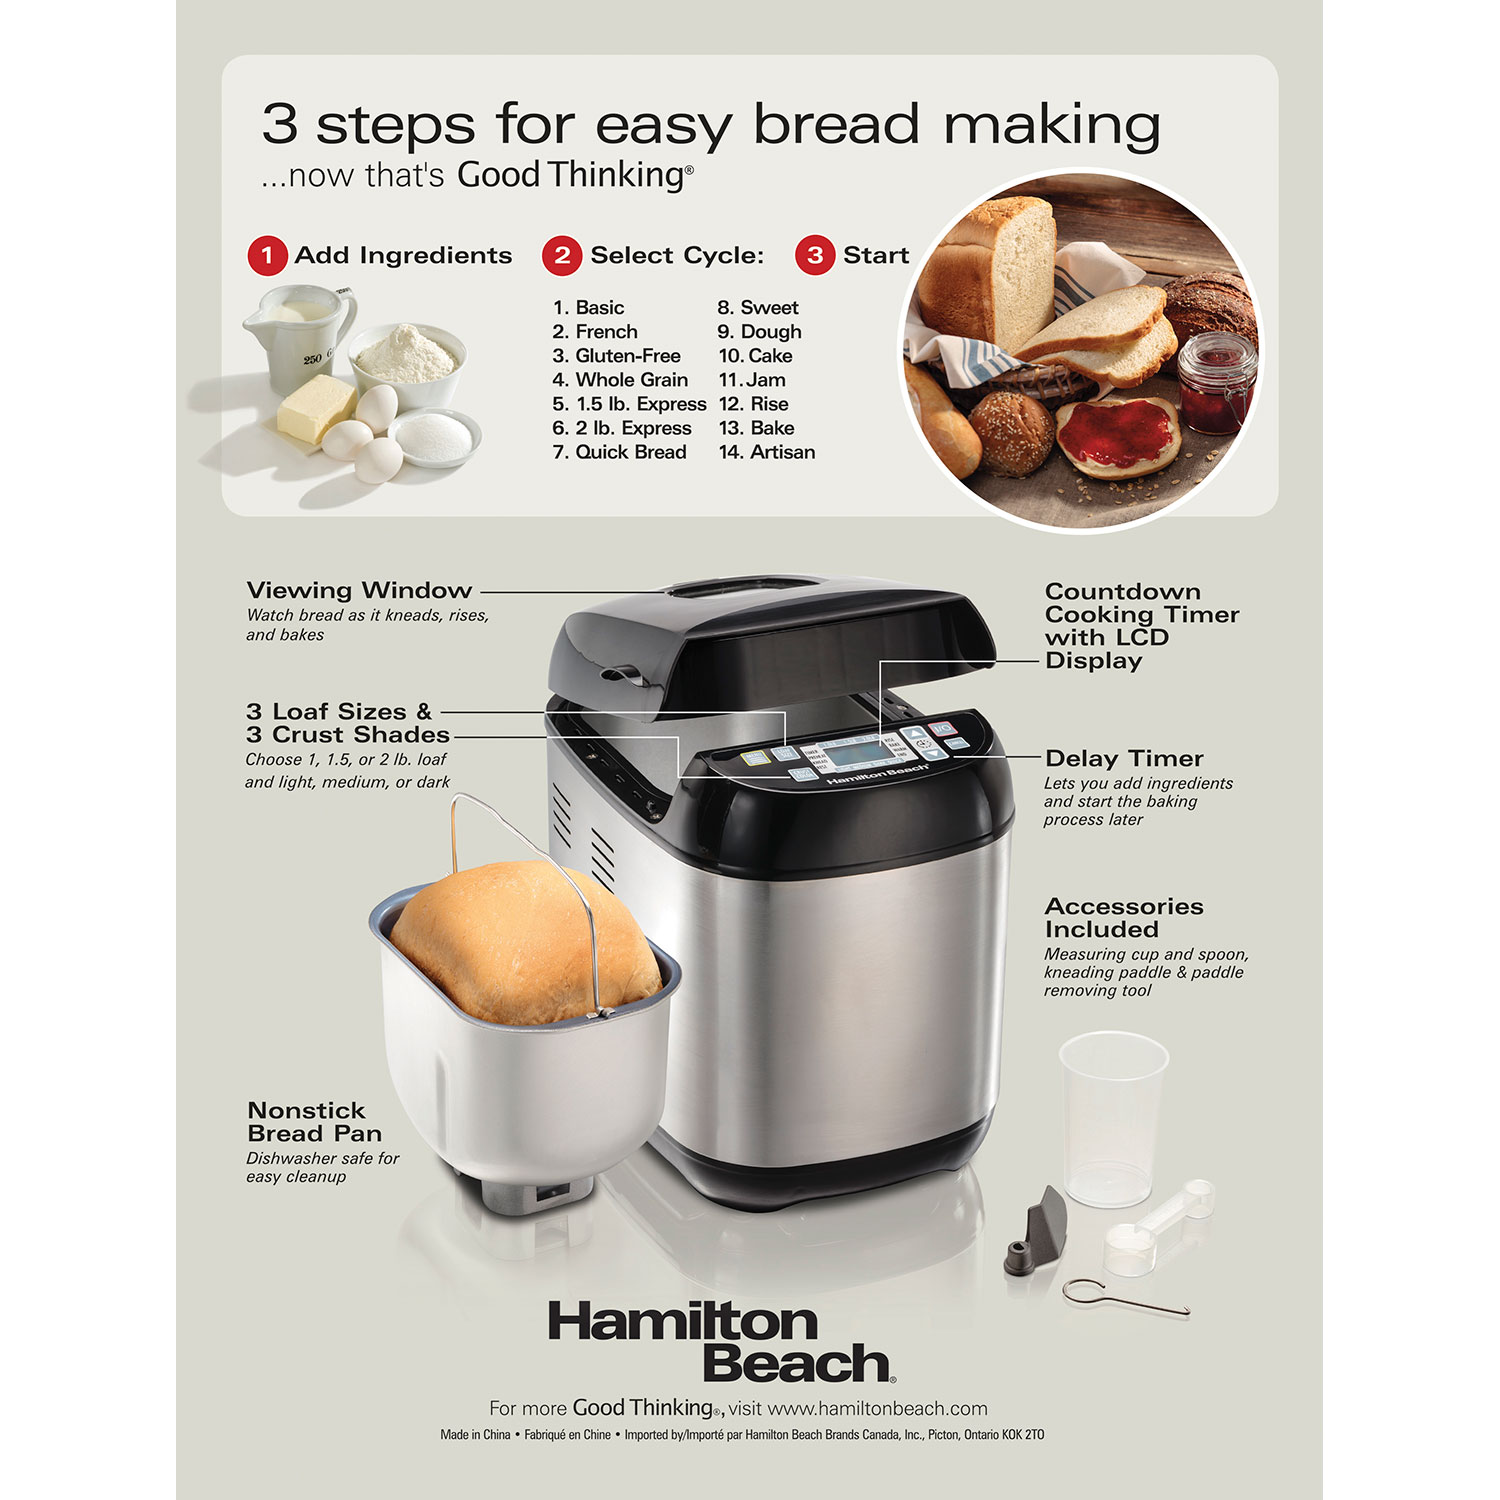 Hamilton Beach 2 Lb Digital Bread Maker Recipes - Bread Poster